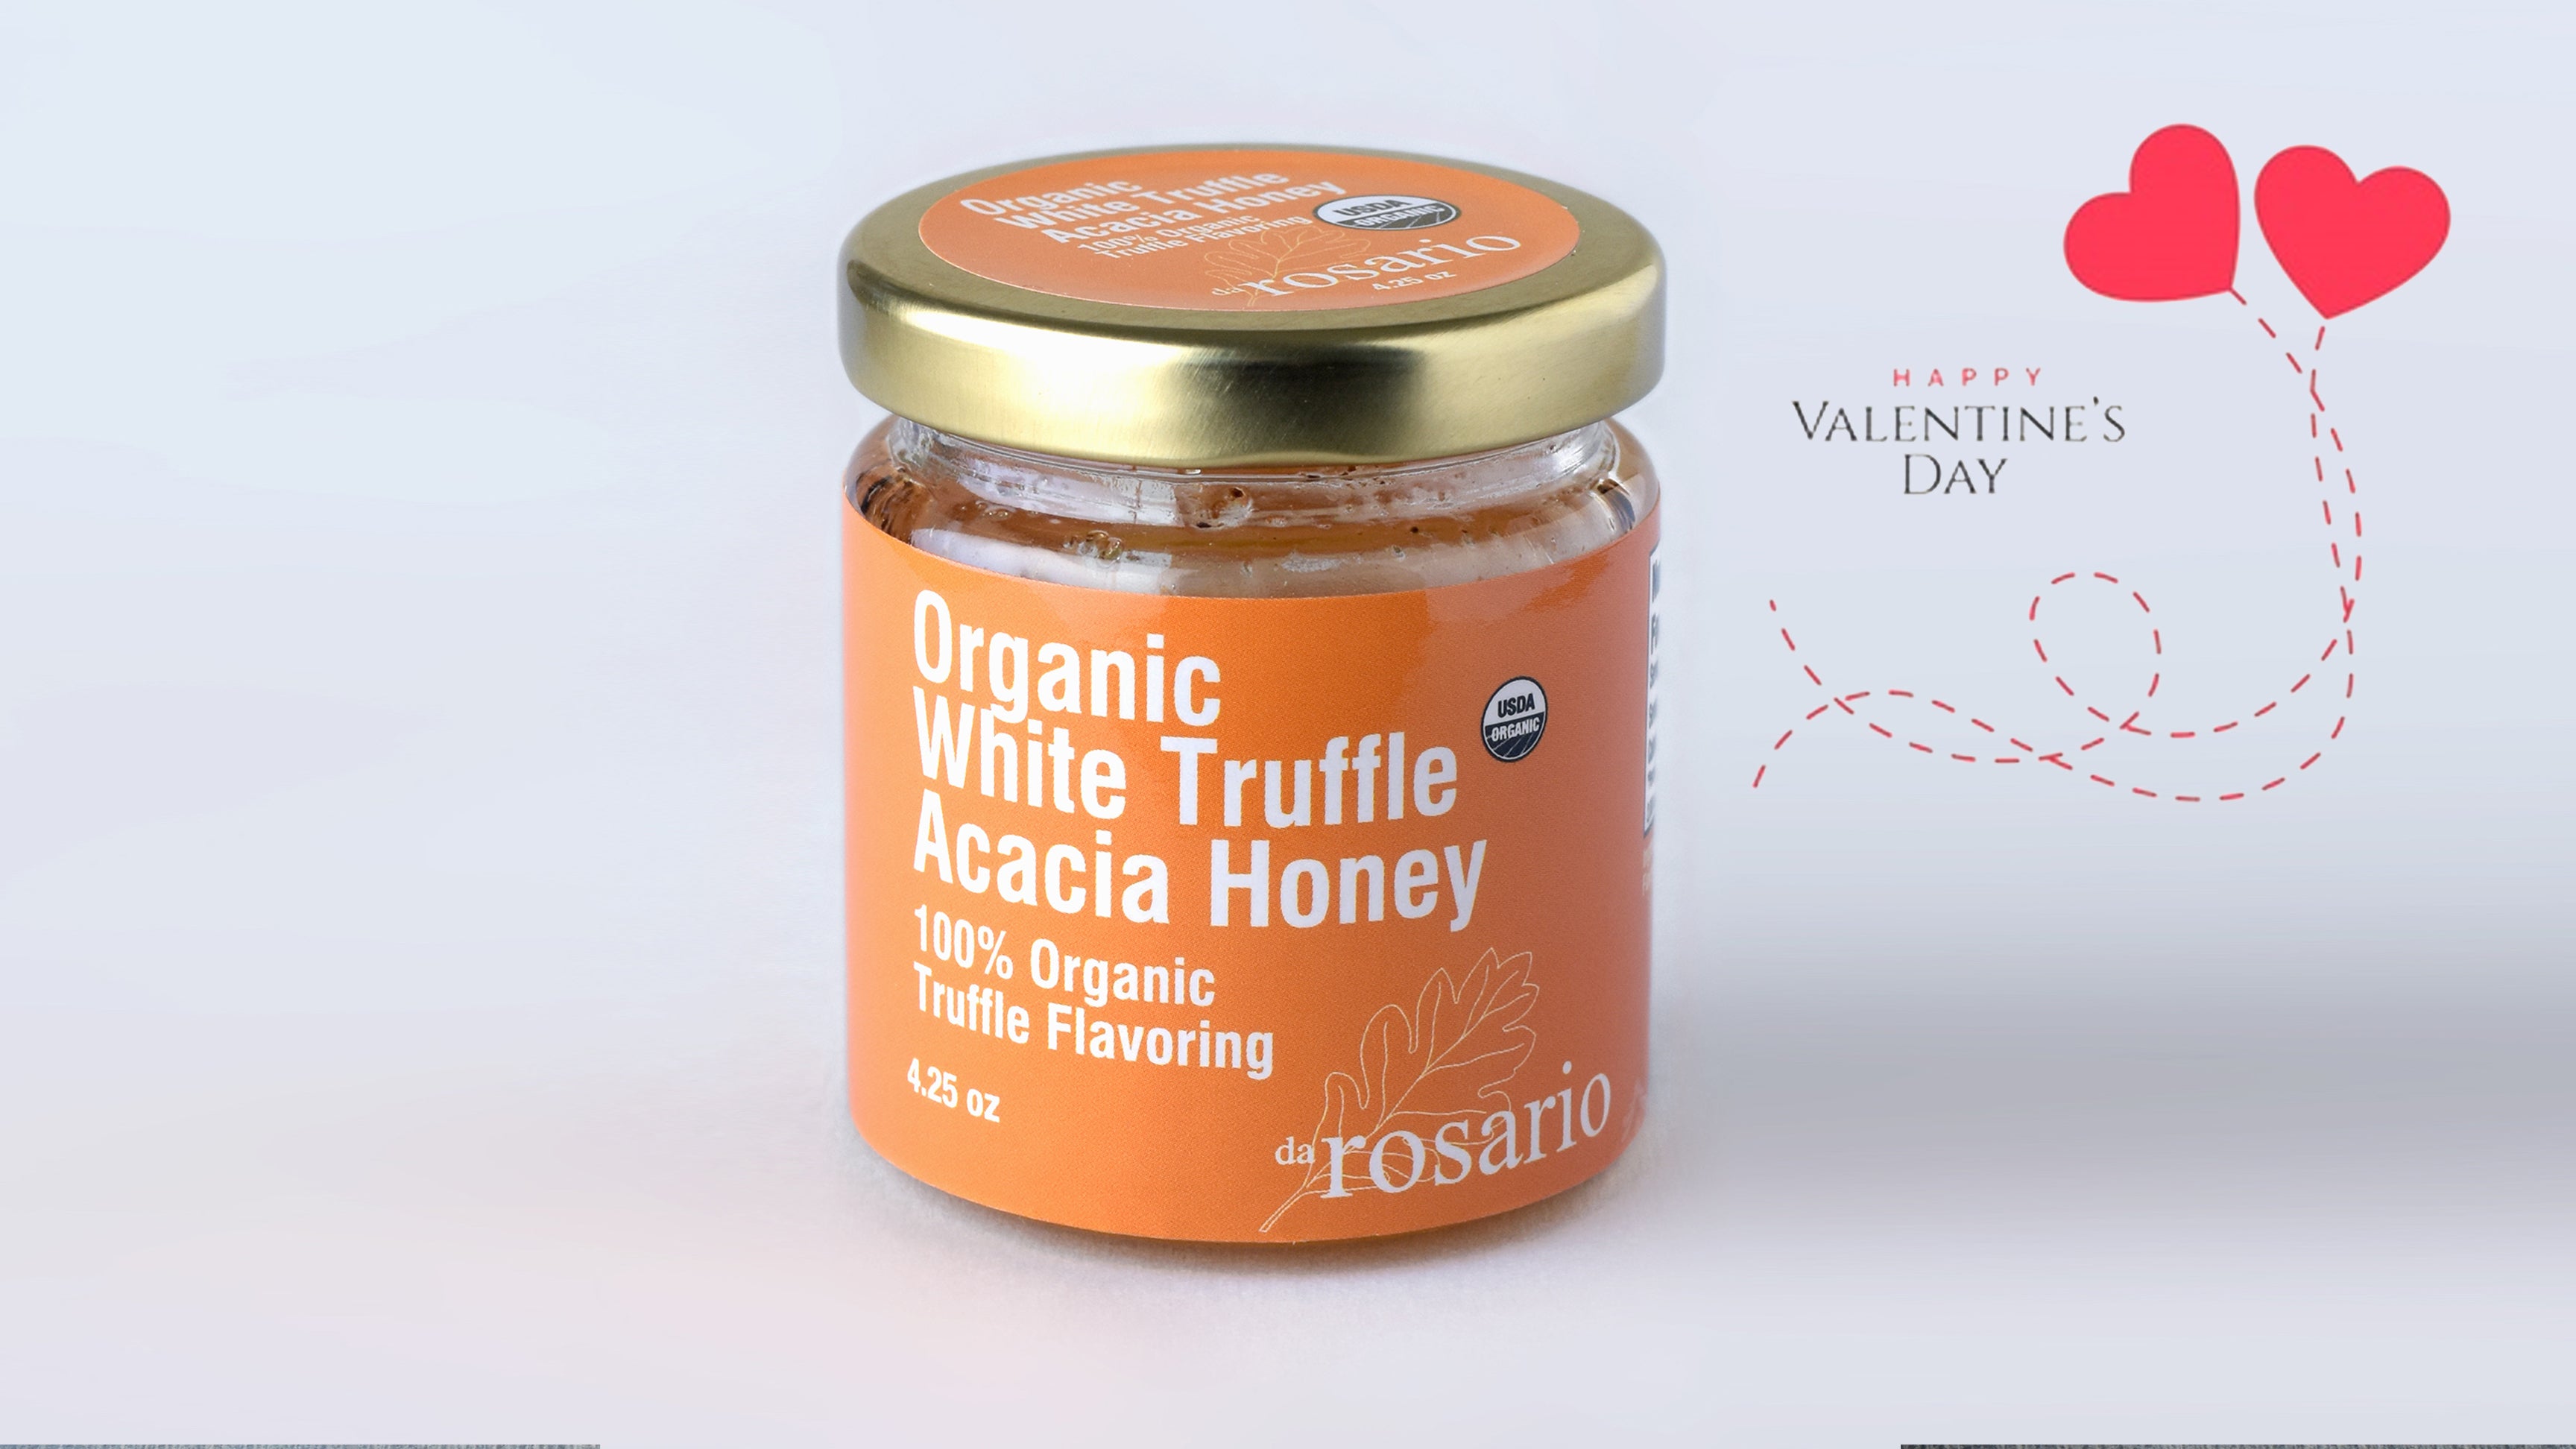 Truffle Acacia Honey for Valentines Day